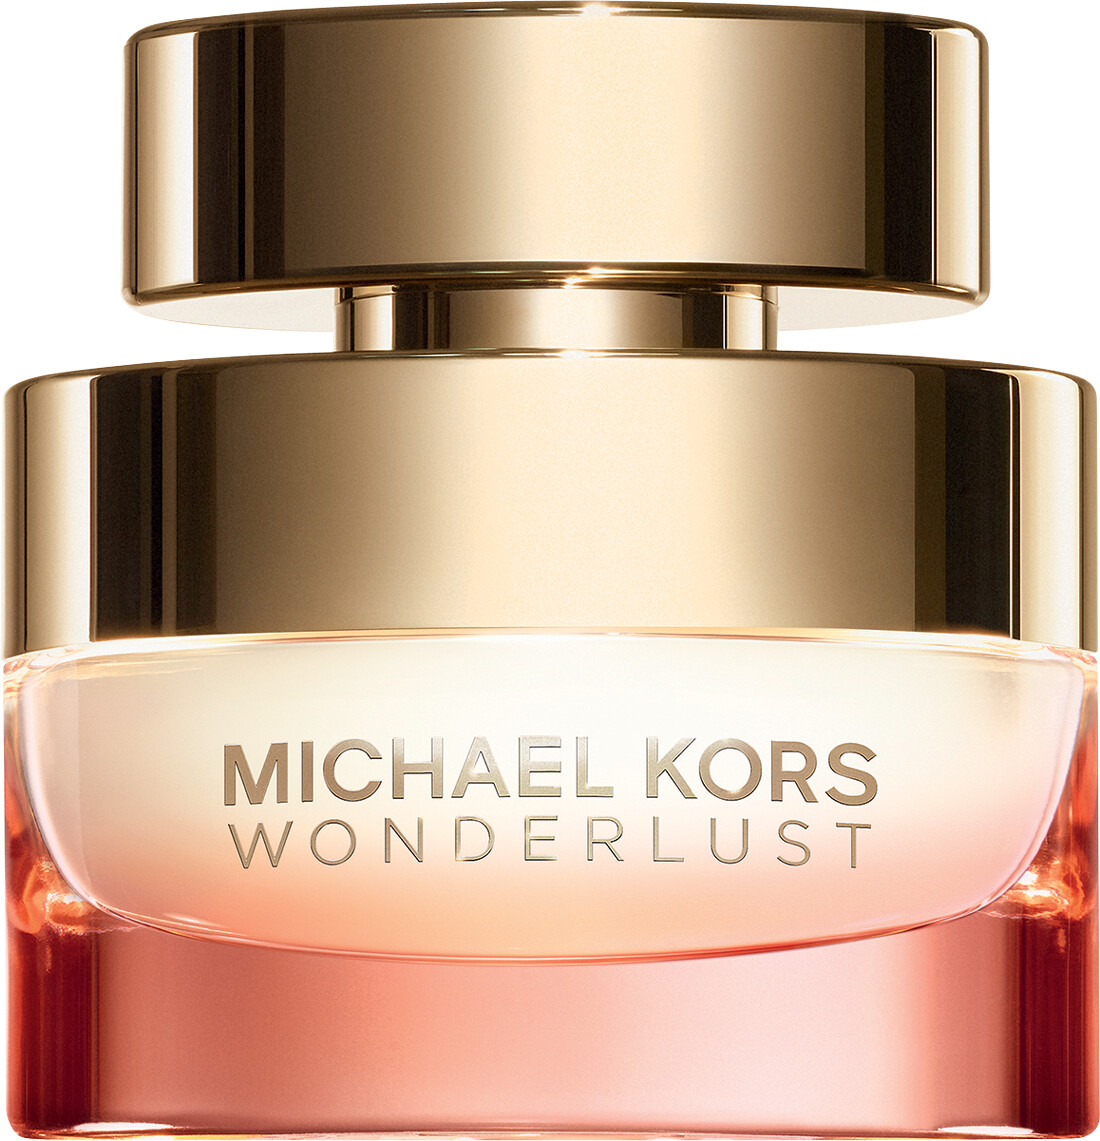 Michael Kors Wonderlust Eau de Parfum Spray 30ml